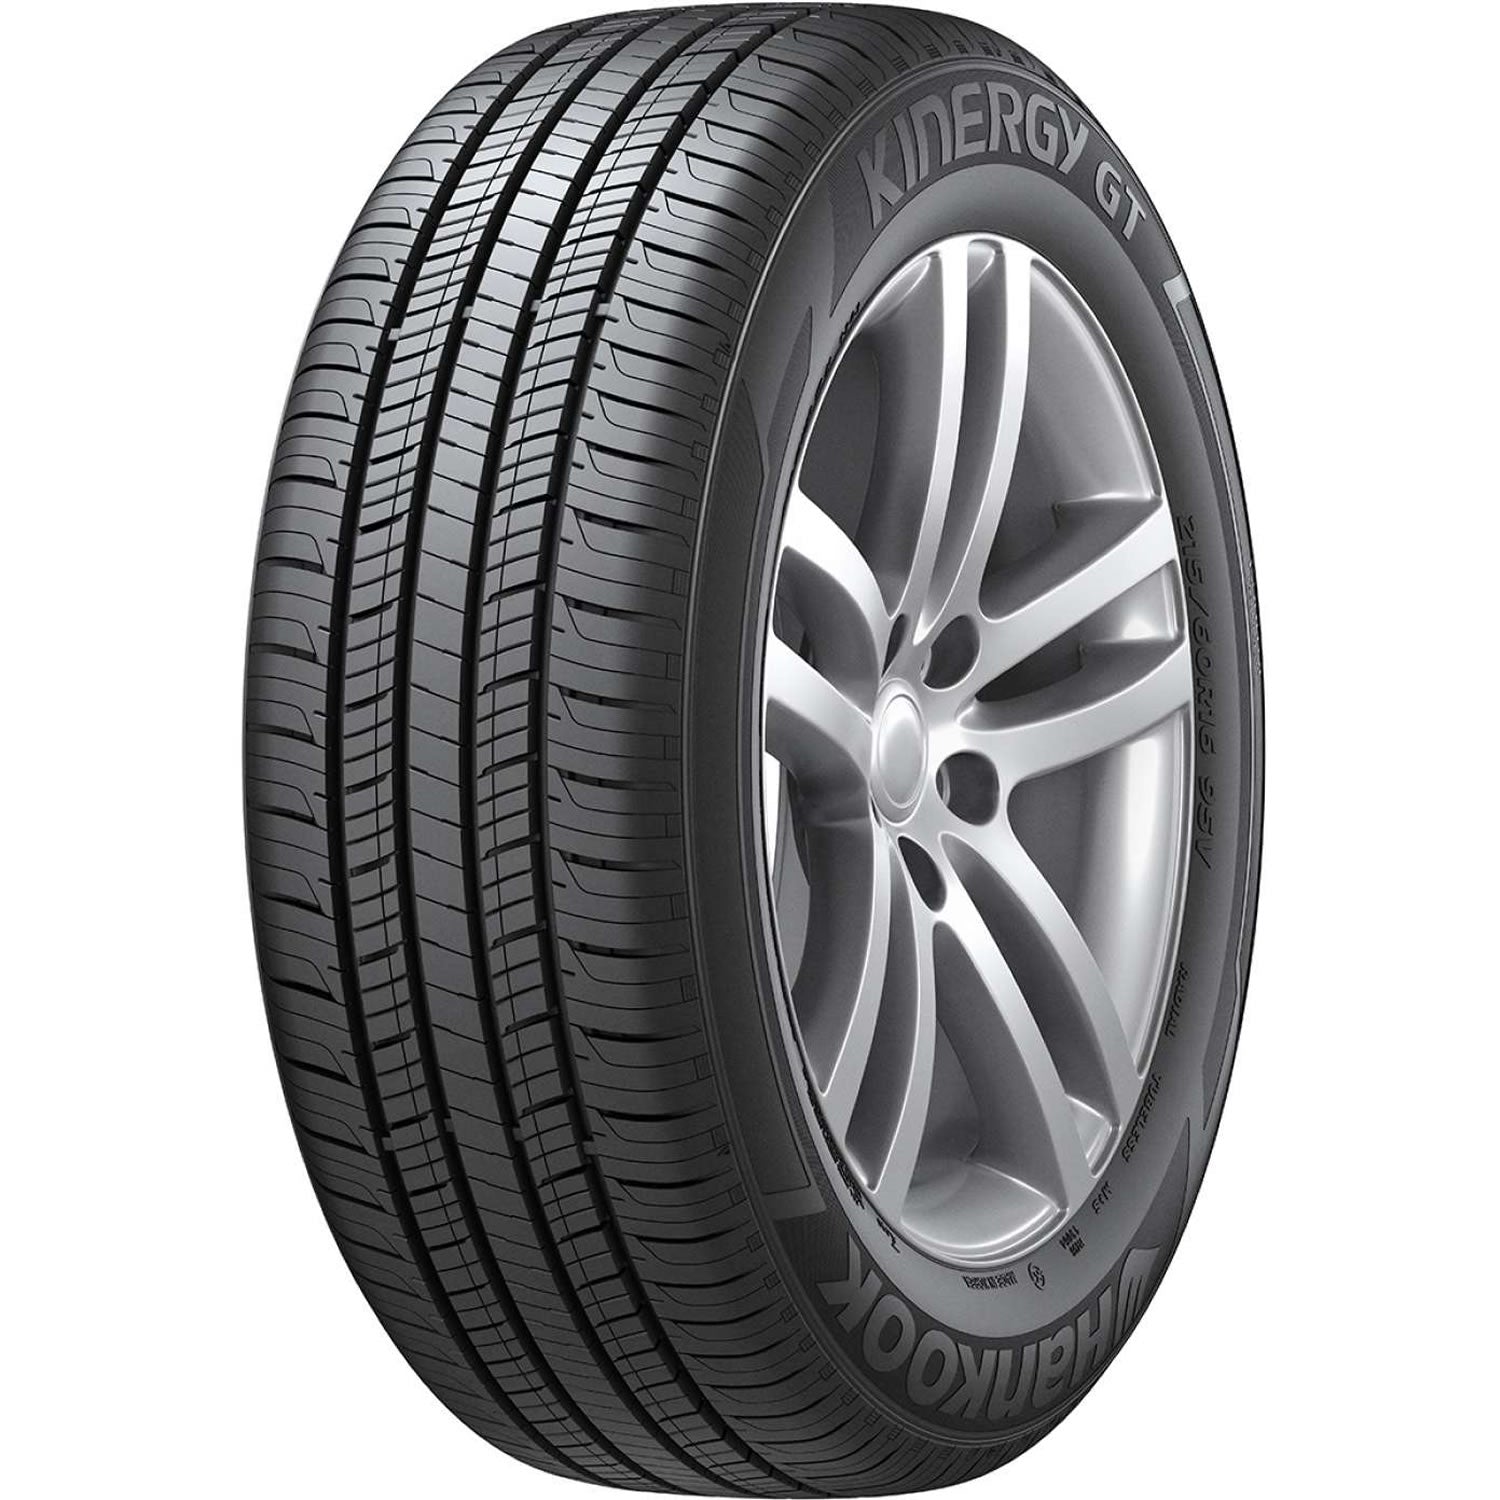 HANKOOK KINERGY GT 205/55R16 (25X8.5R 16) Tires